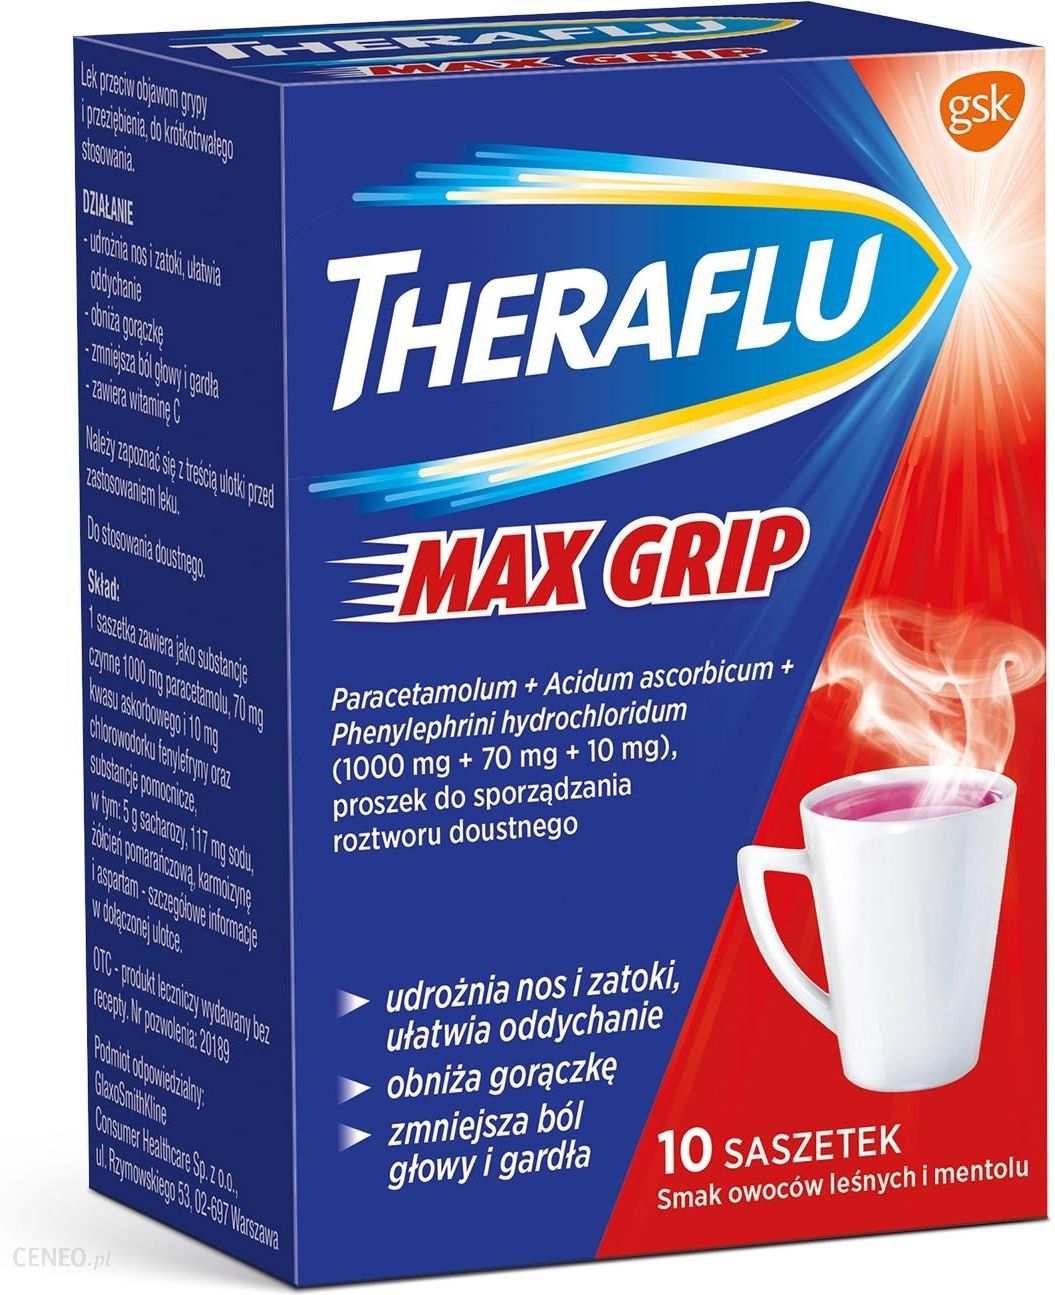  Theraflu Max Grip 10 szaszetek